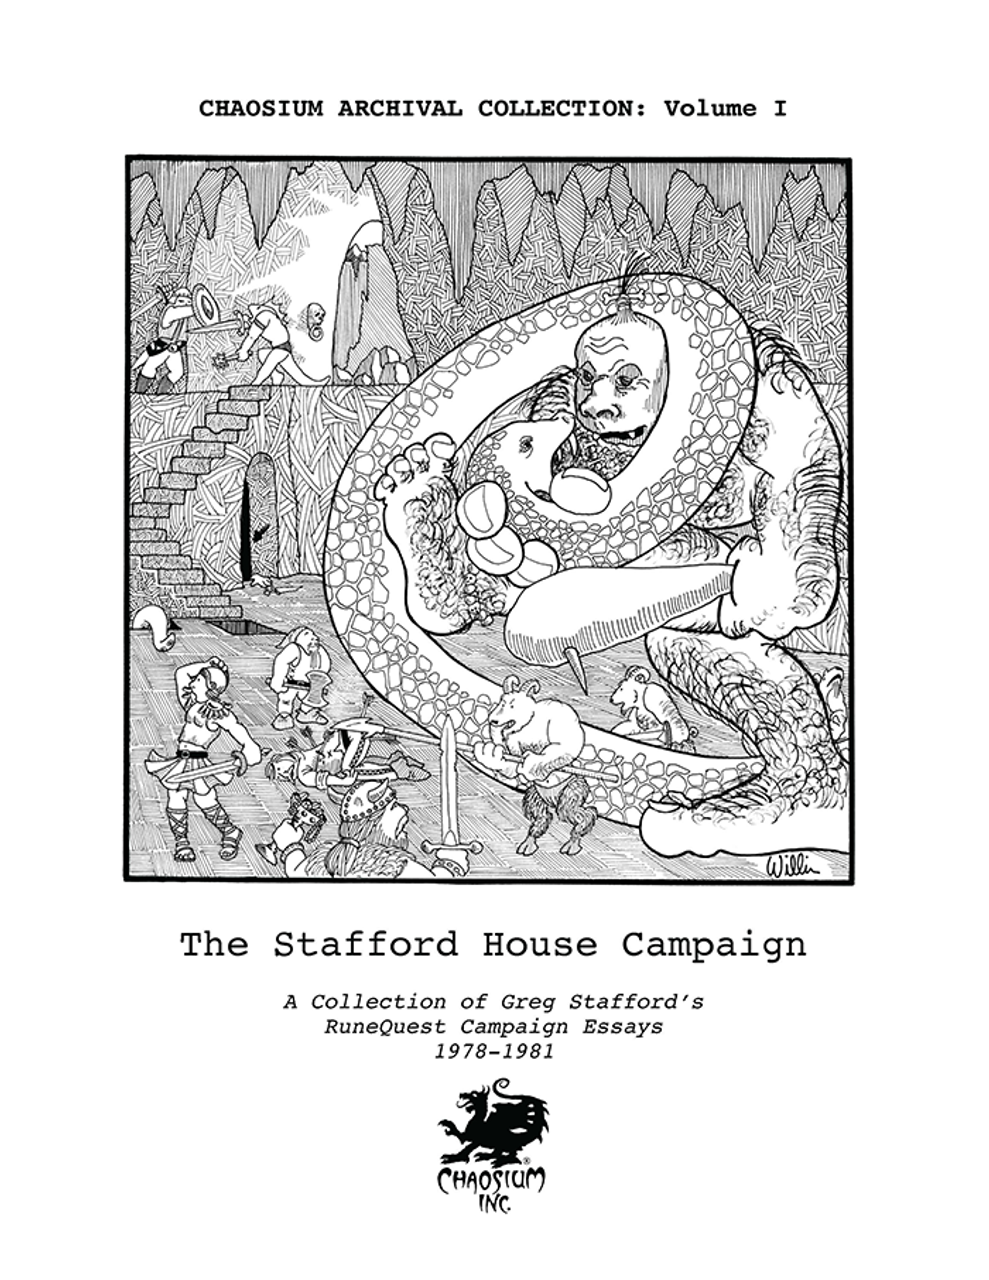 The Stafford House Campaign - PDF - Chaosium Inc.